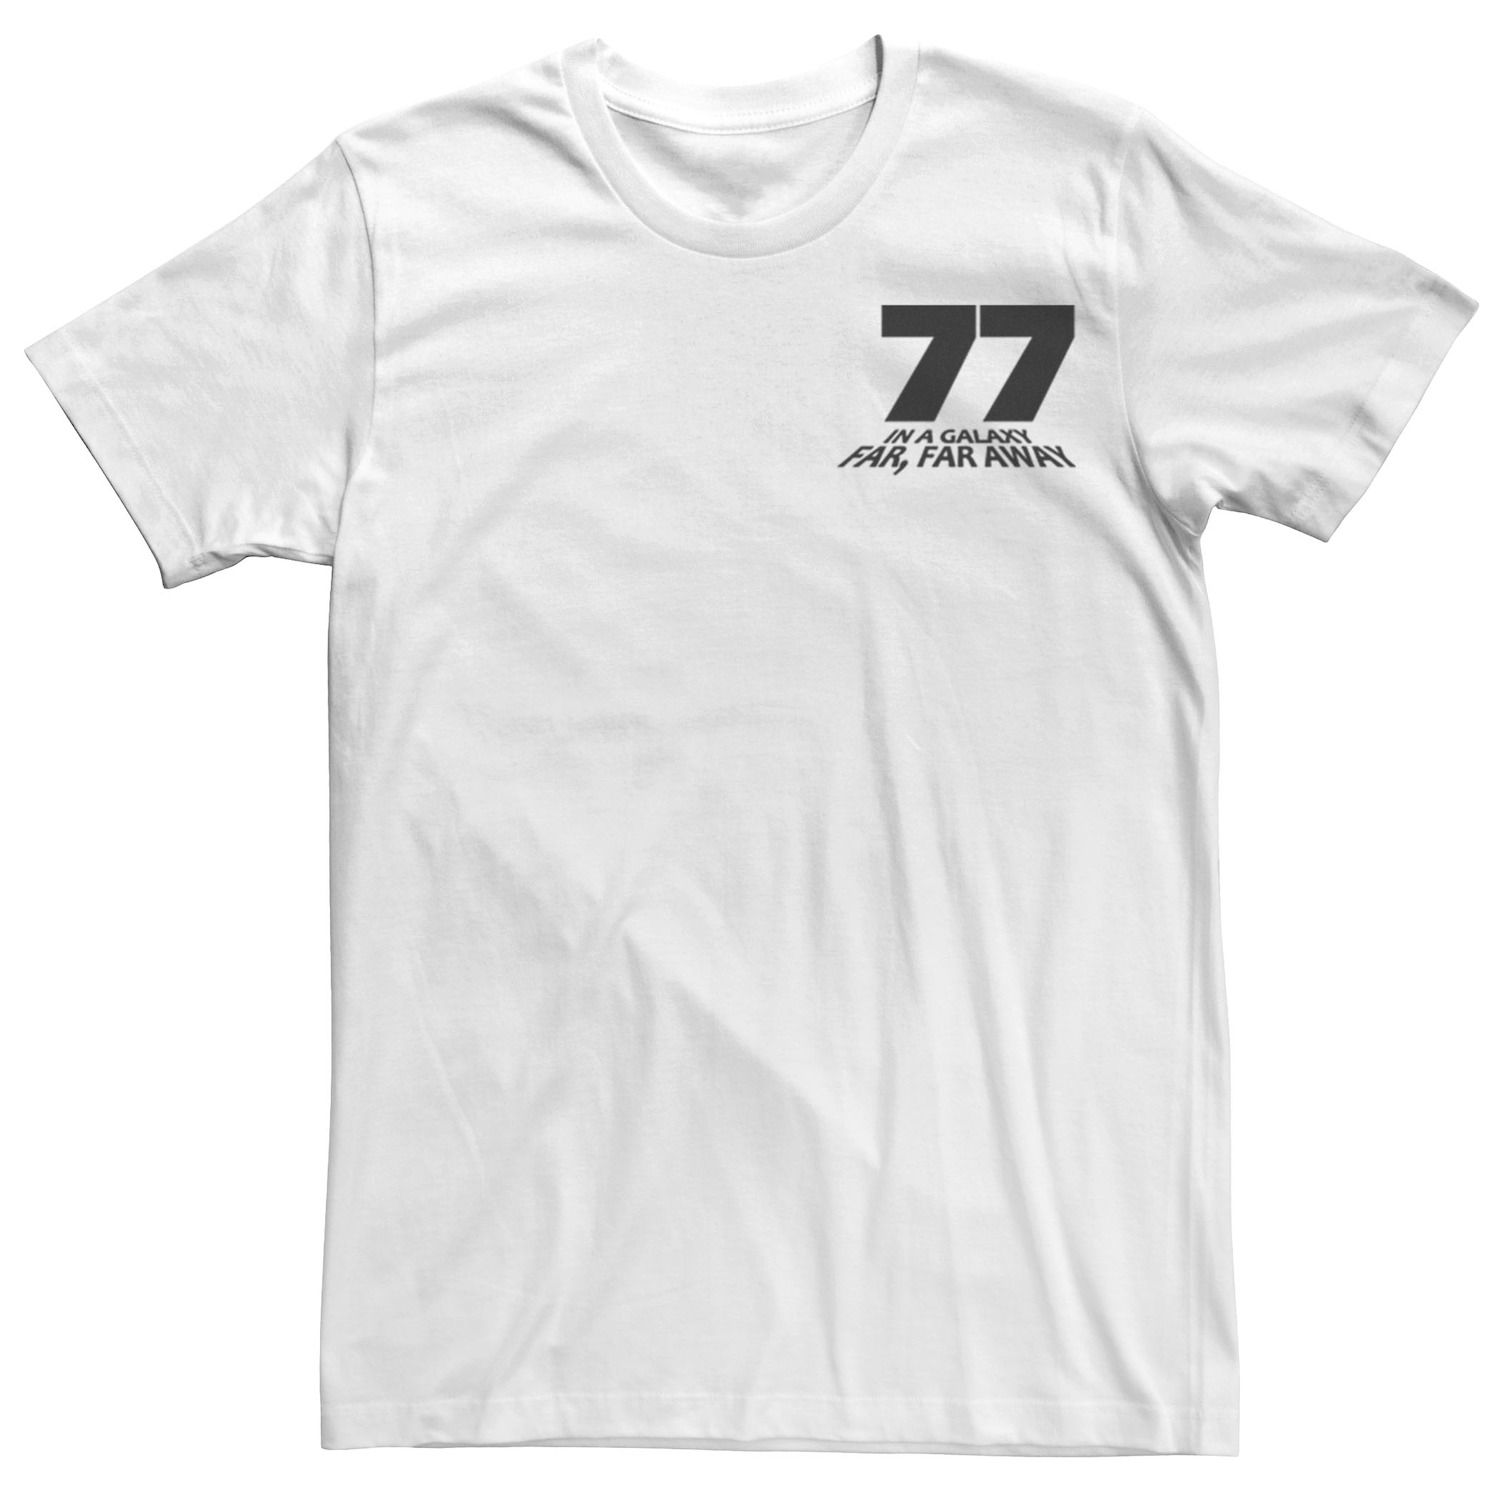 Мужская футболка Far, Far Away 77 с рисунком на левой груди Star Wars